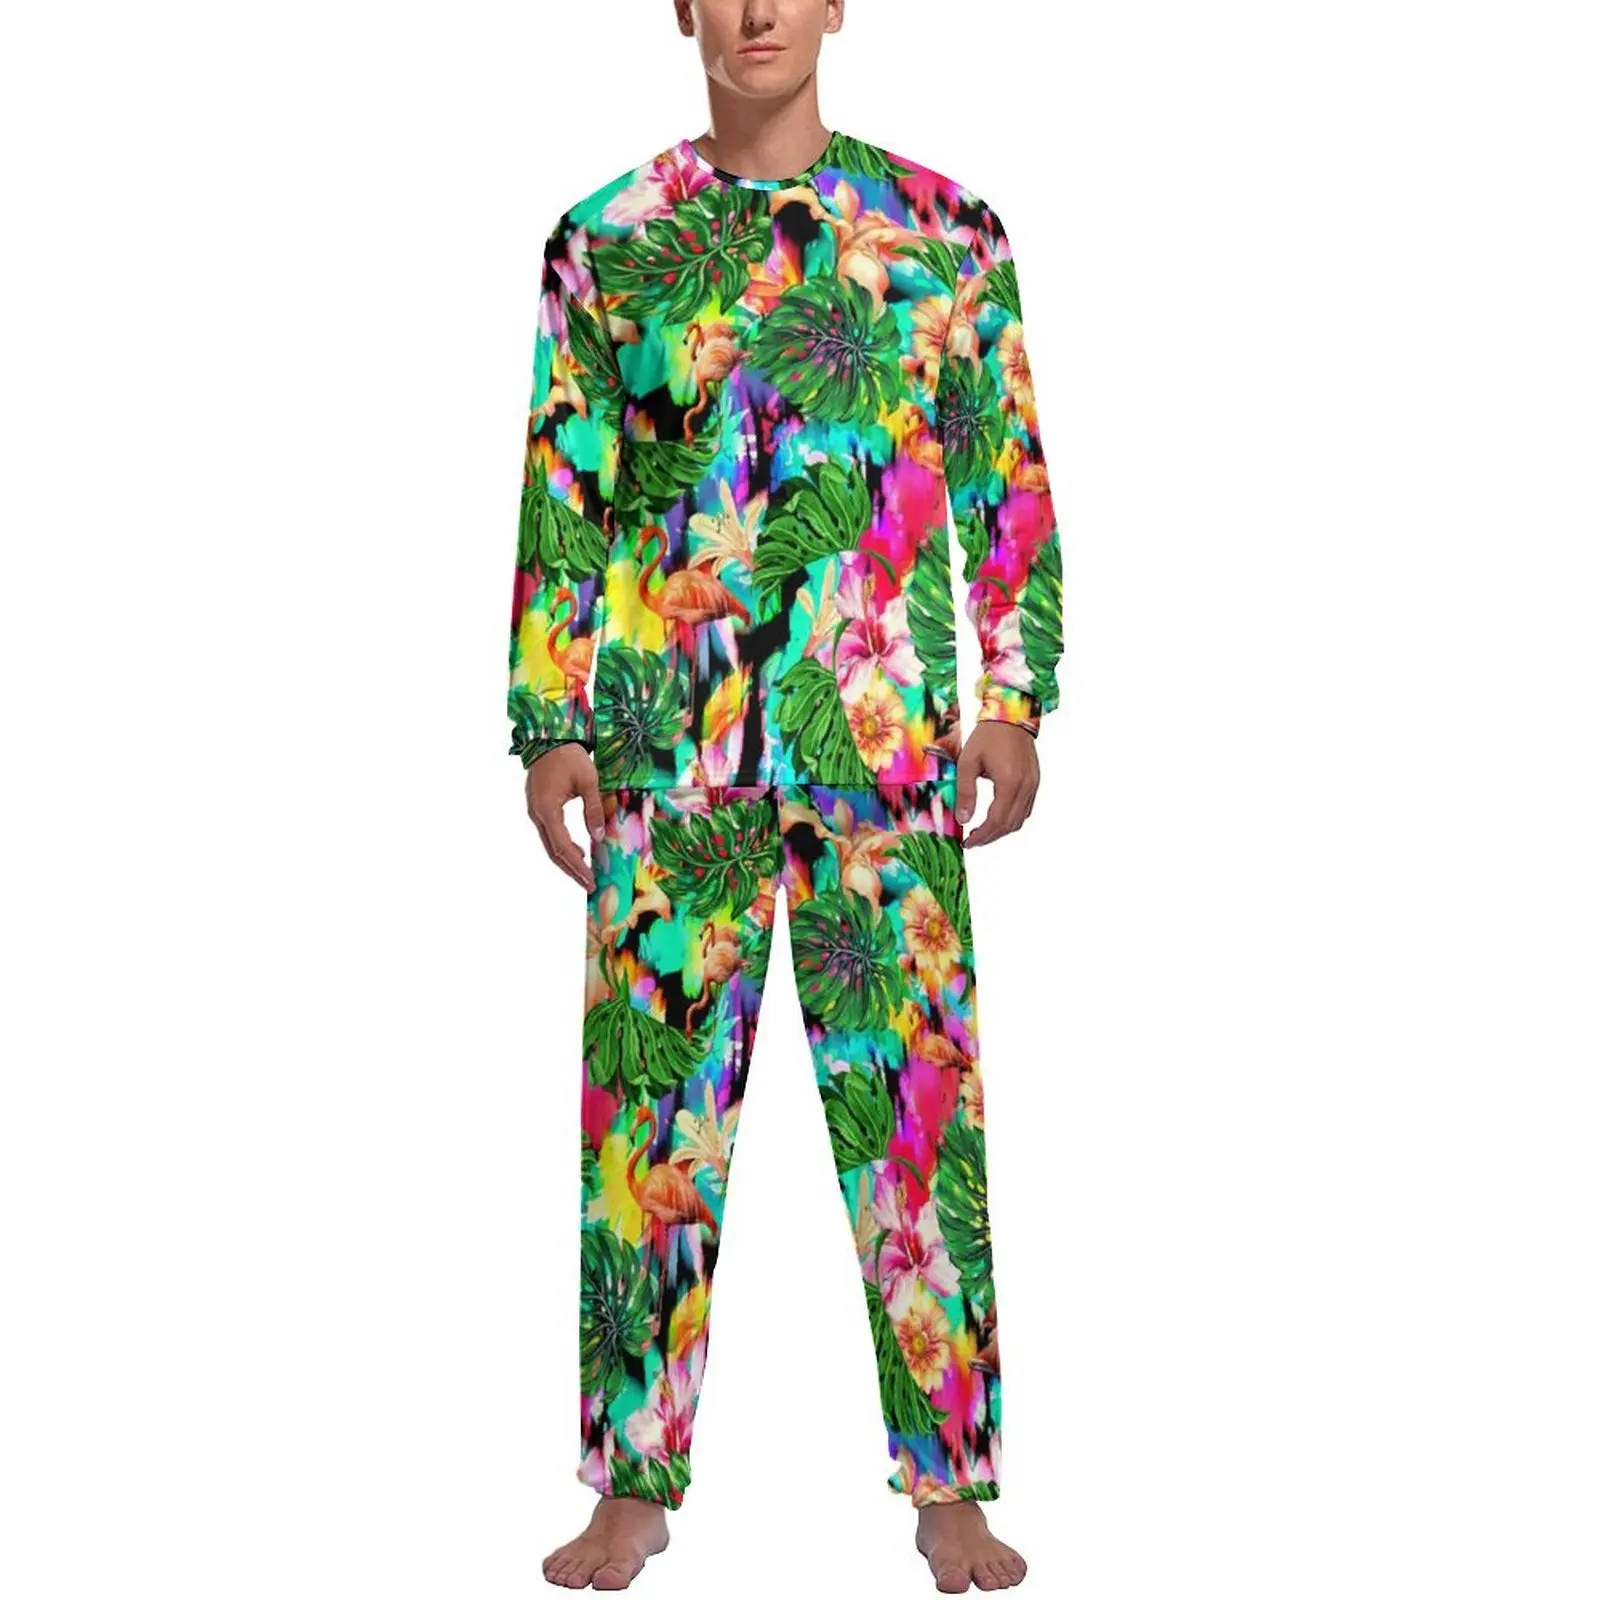 

Flamingo Print Pajamas Tropical Leaves Men Long Sleeve Romantic Pajama Sets 2 Piece Casual Daily Graphic Nightwear Gift